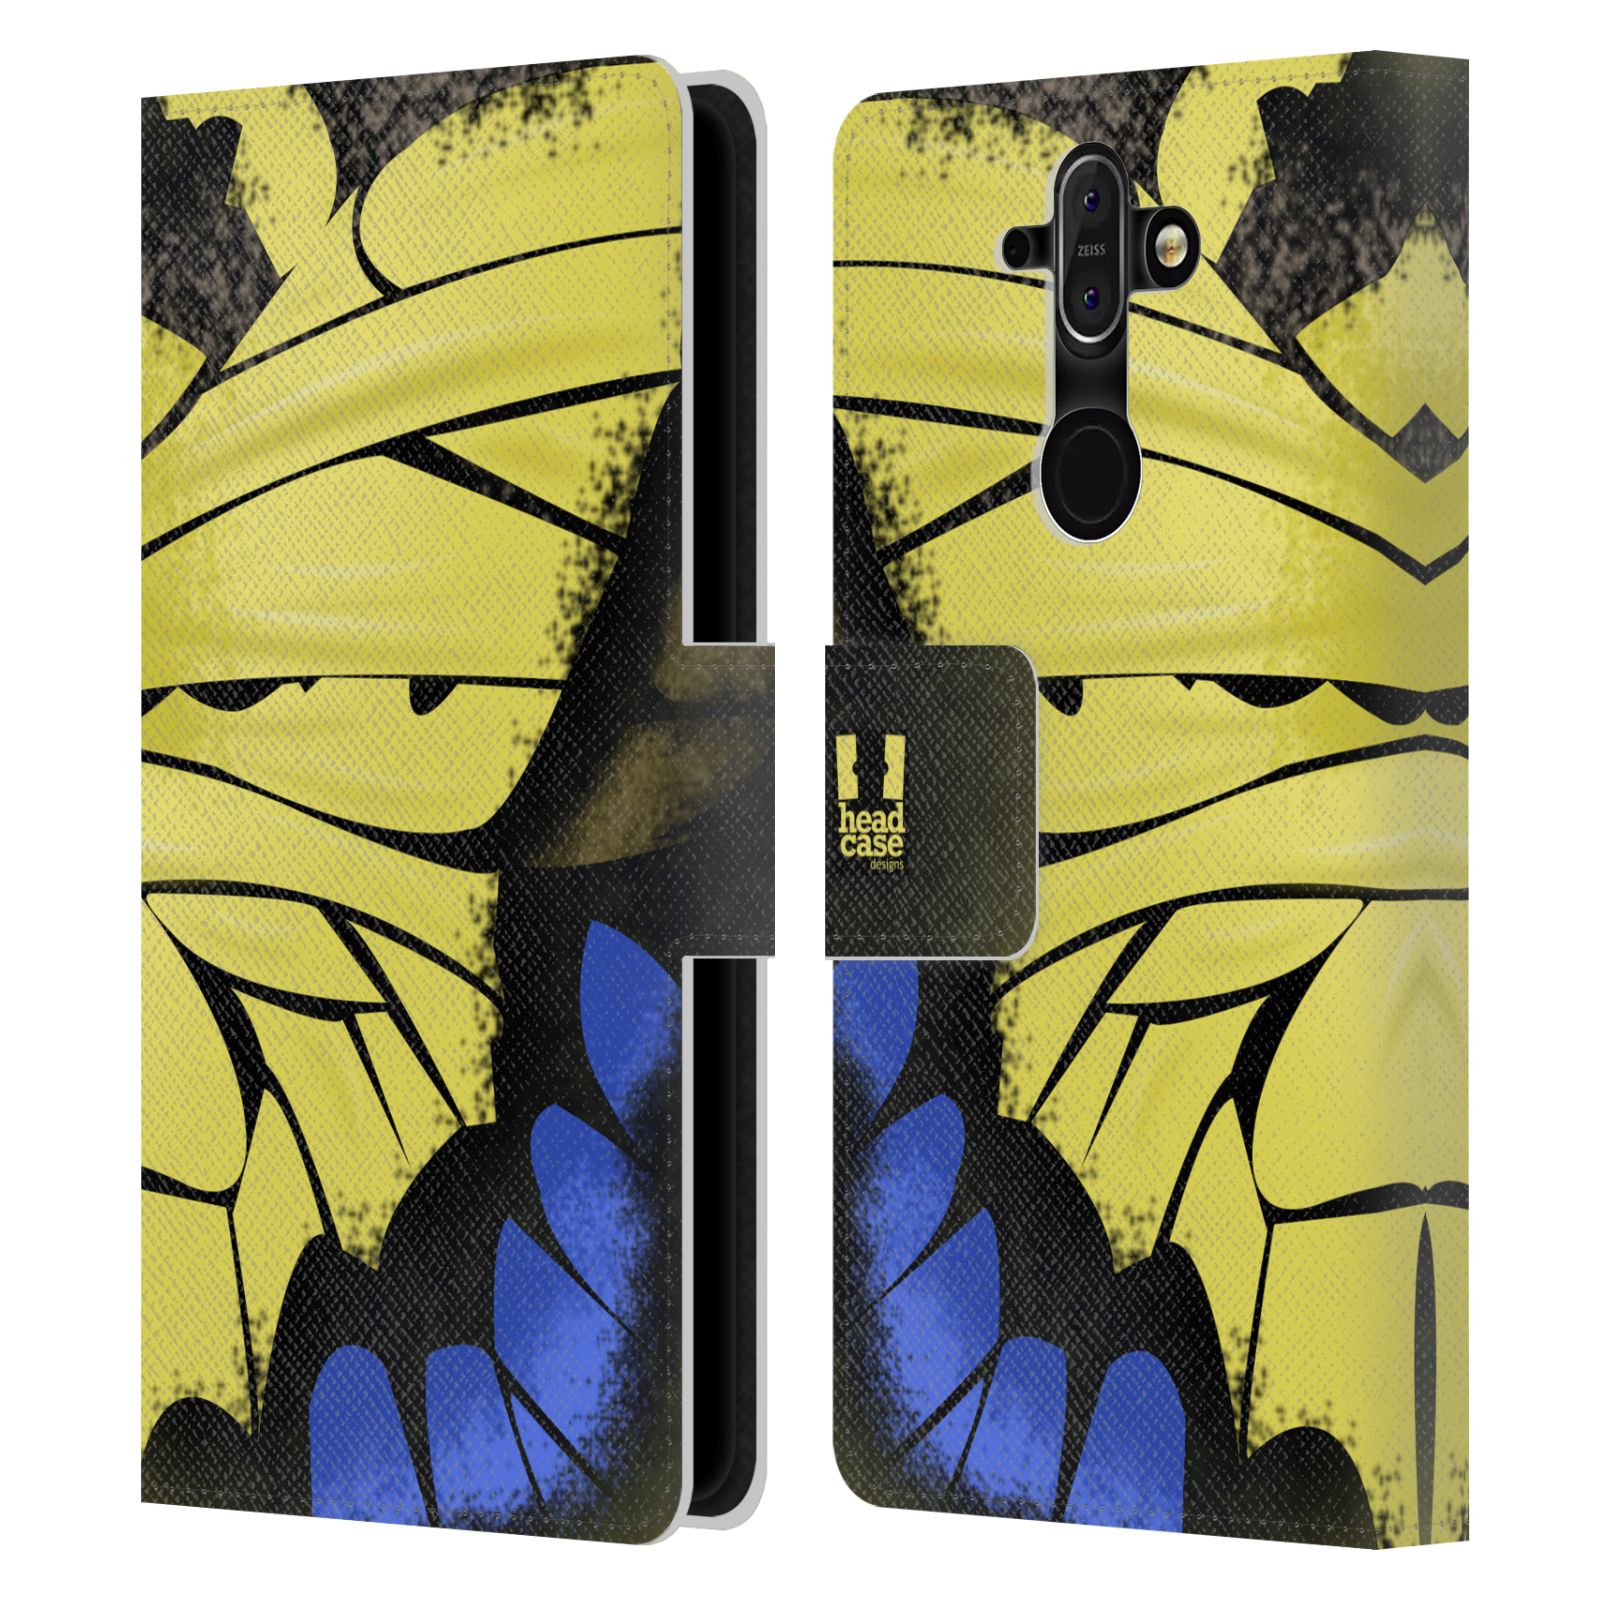 HEAD CASE Flipové pouzdro pro mobil Nokia 8 SIROCCO motýl a křídla kreslený vzor žlutá a modrá